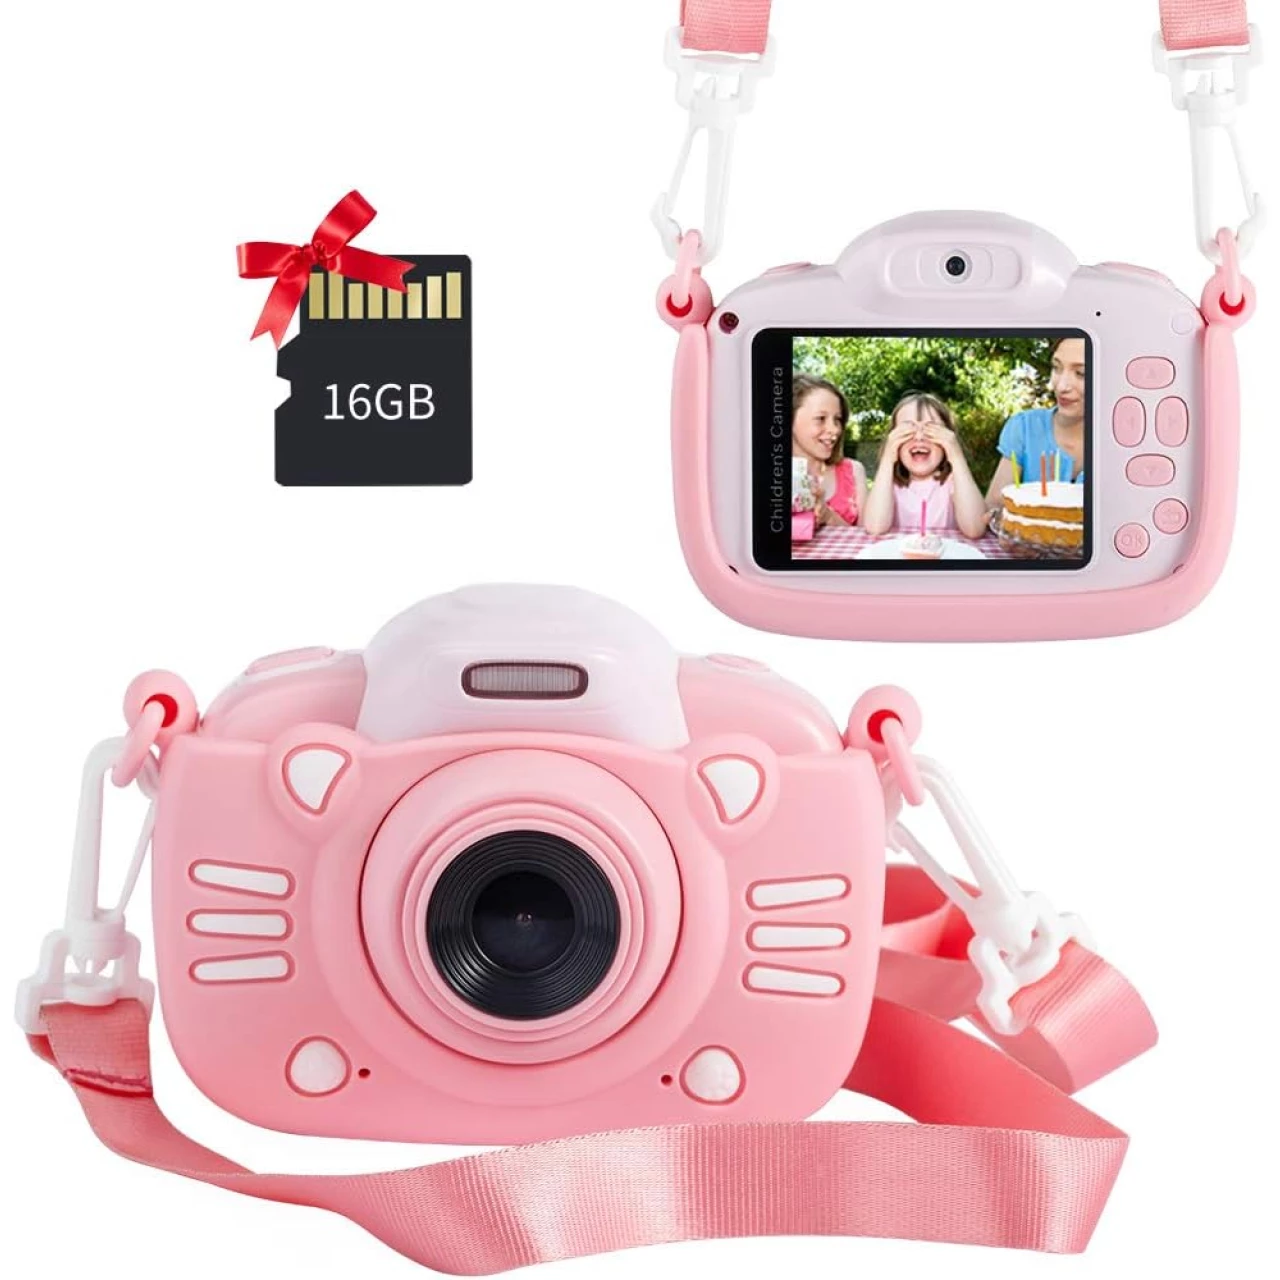 MINIBEAR Kids Digital Camera for Toddler Girls Toy Camera Kids Video Camera, Children Selfie Camera 2.4 Inch IPS Screen Mini Kids Camcorder Video Recorder with 16GB SD Card - Pink